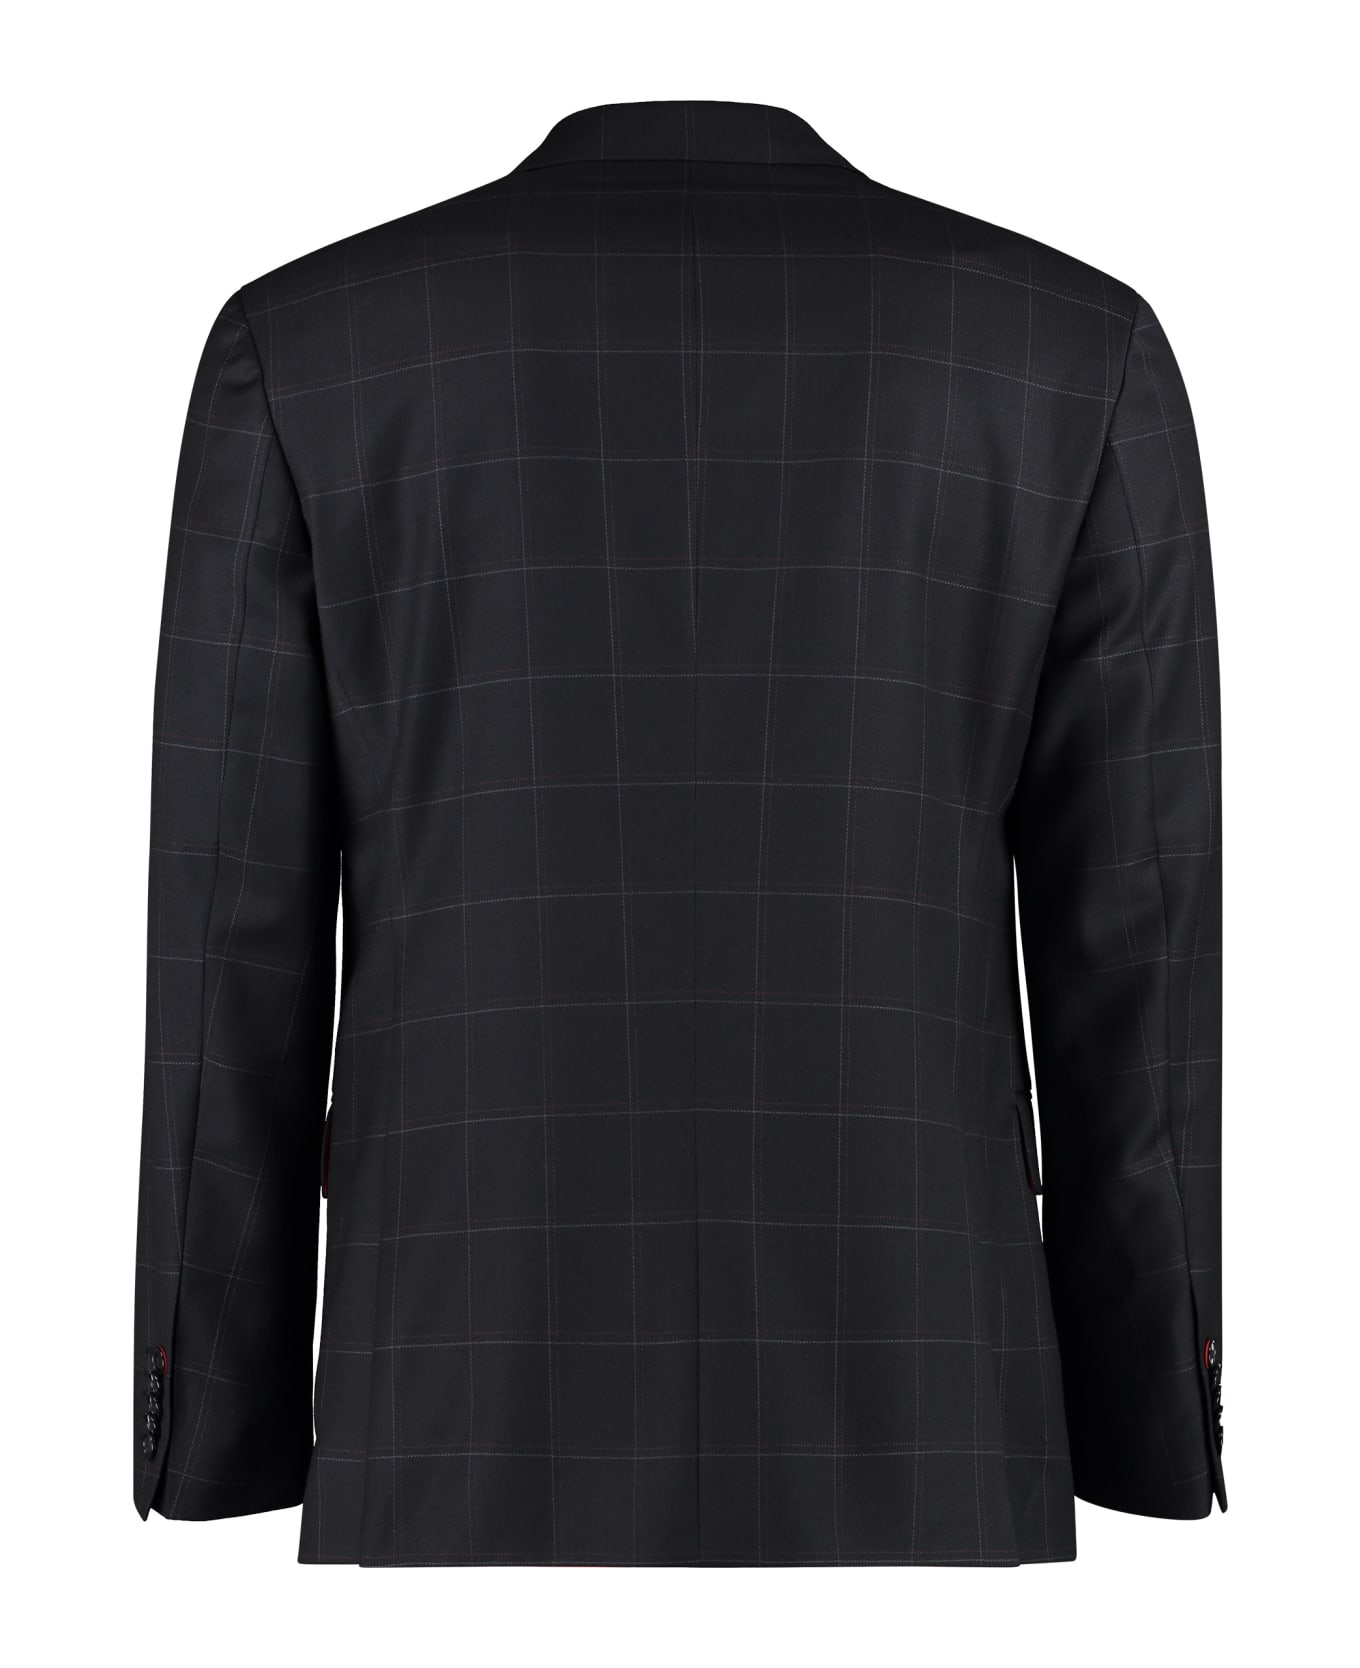 Hugo Boss Double-breasted Wool Jacket - black